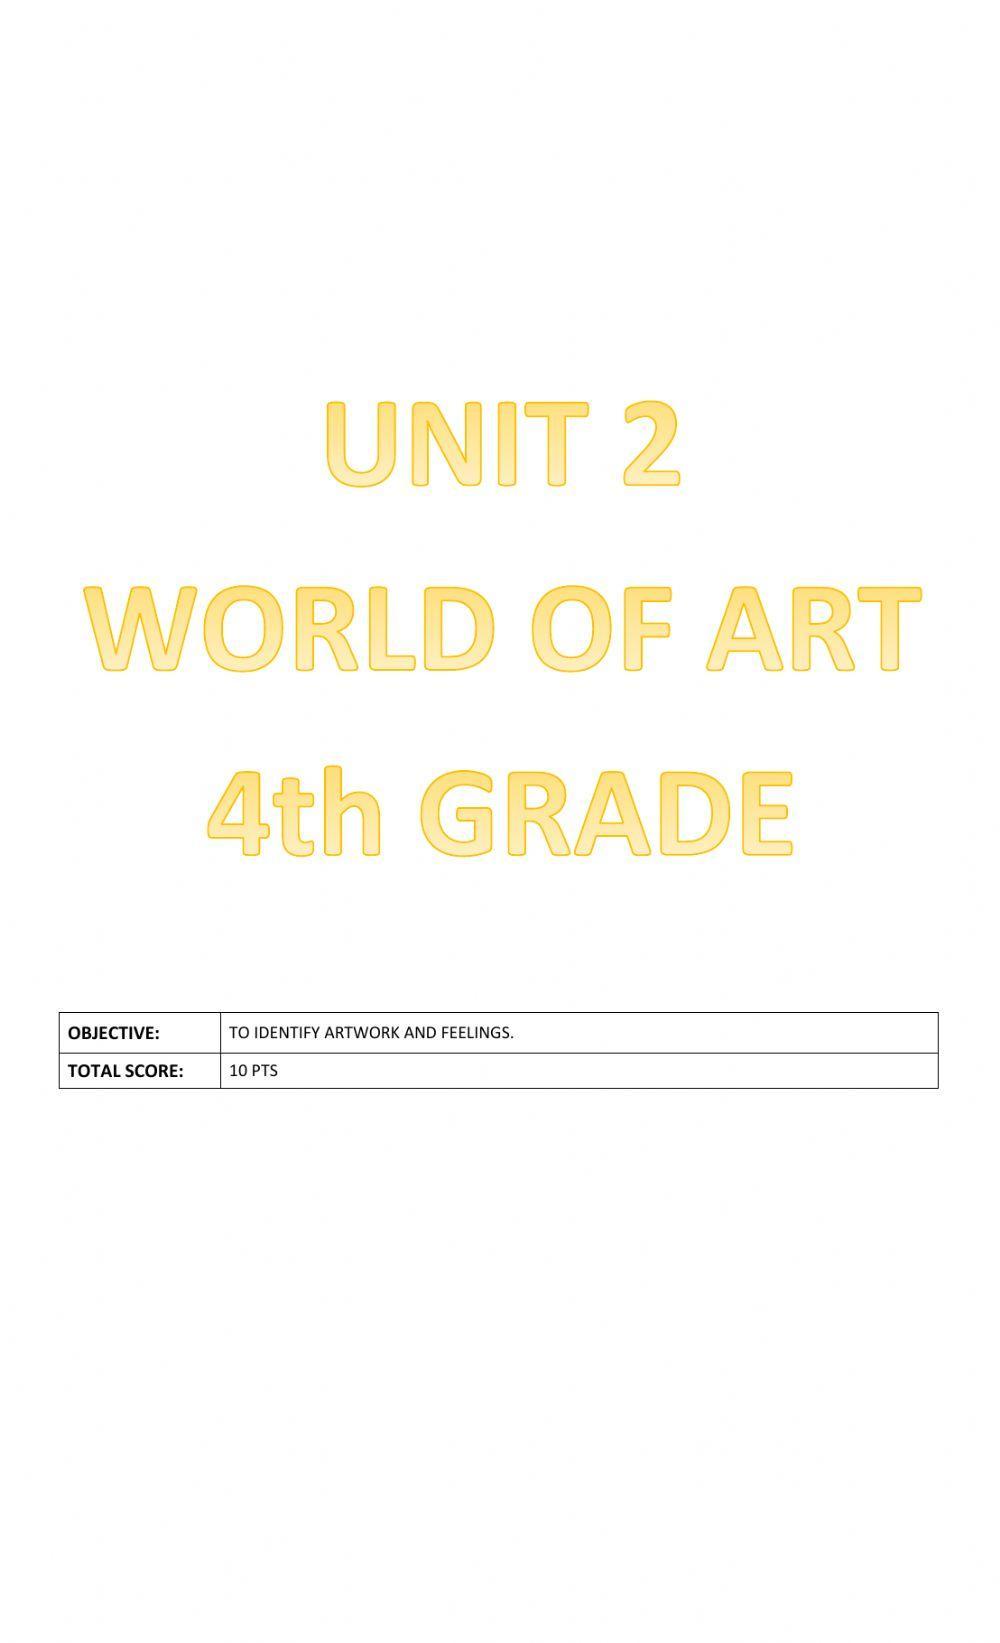 World of art- Unit 2